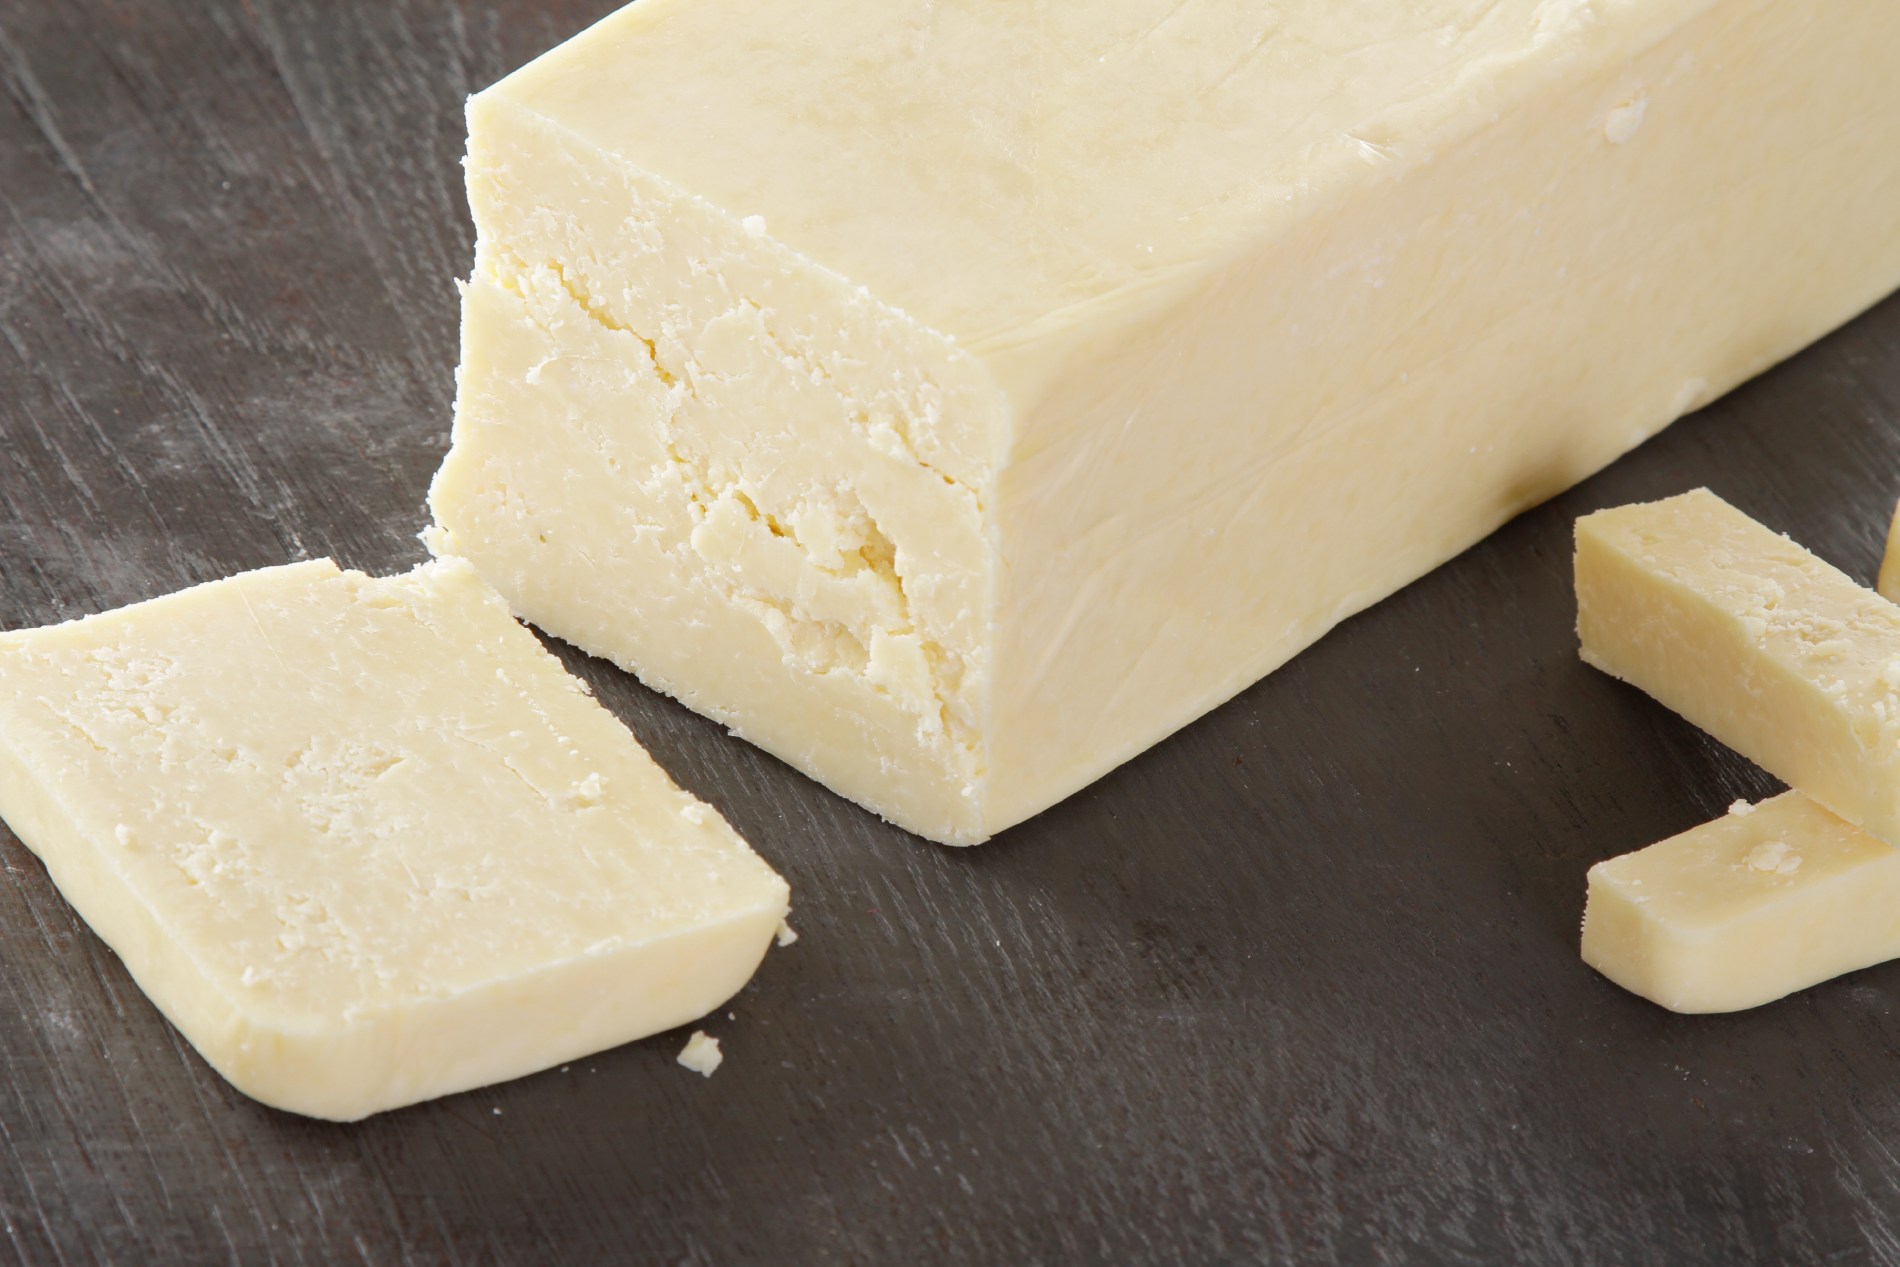 Wholesale Block Cheese Supplier UK | J.S. Bailey Ltd